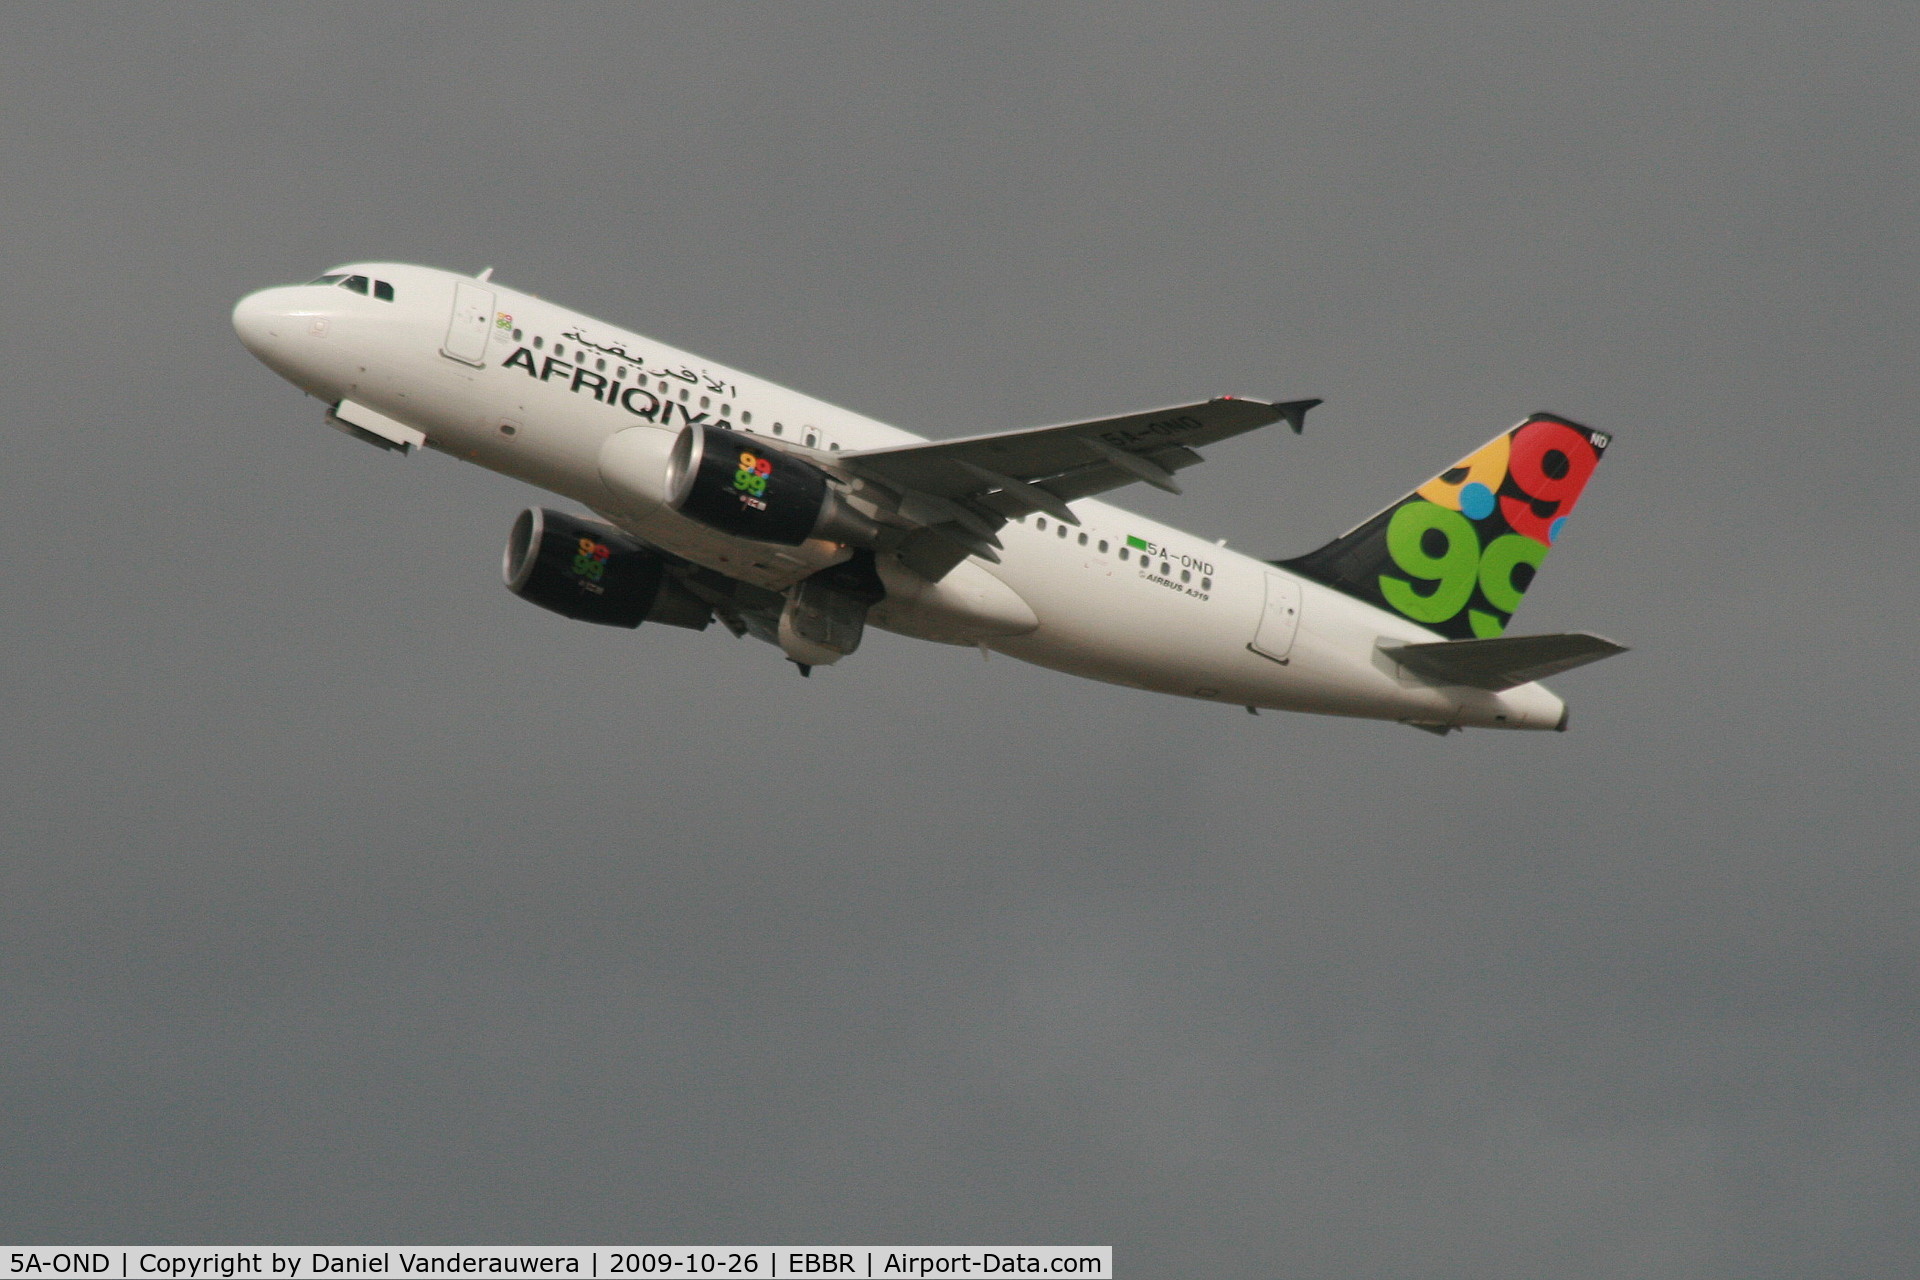 5A-OND, 2008 Airbus A319-111 C/N 3657, Flight 8U925 is taking off from rwy 25R